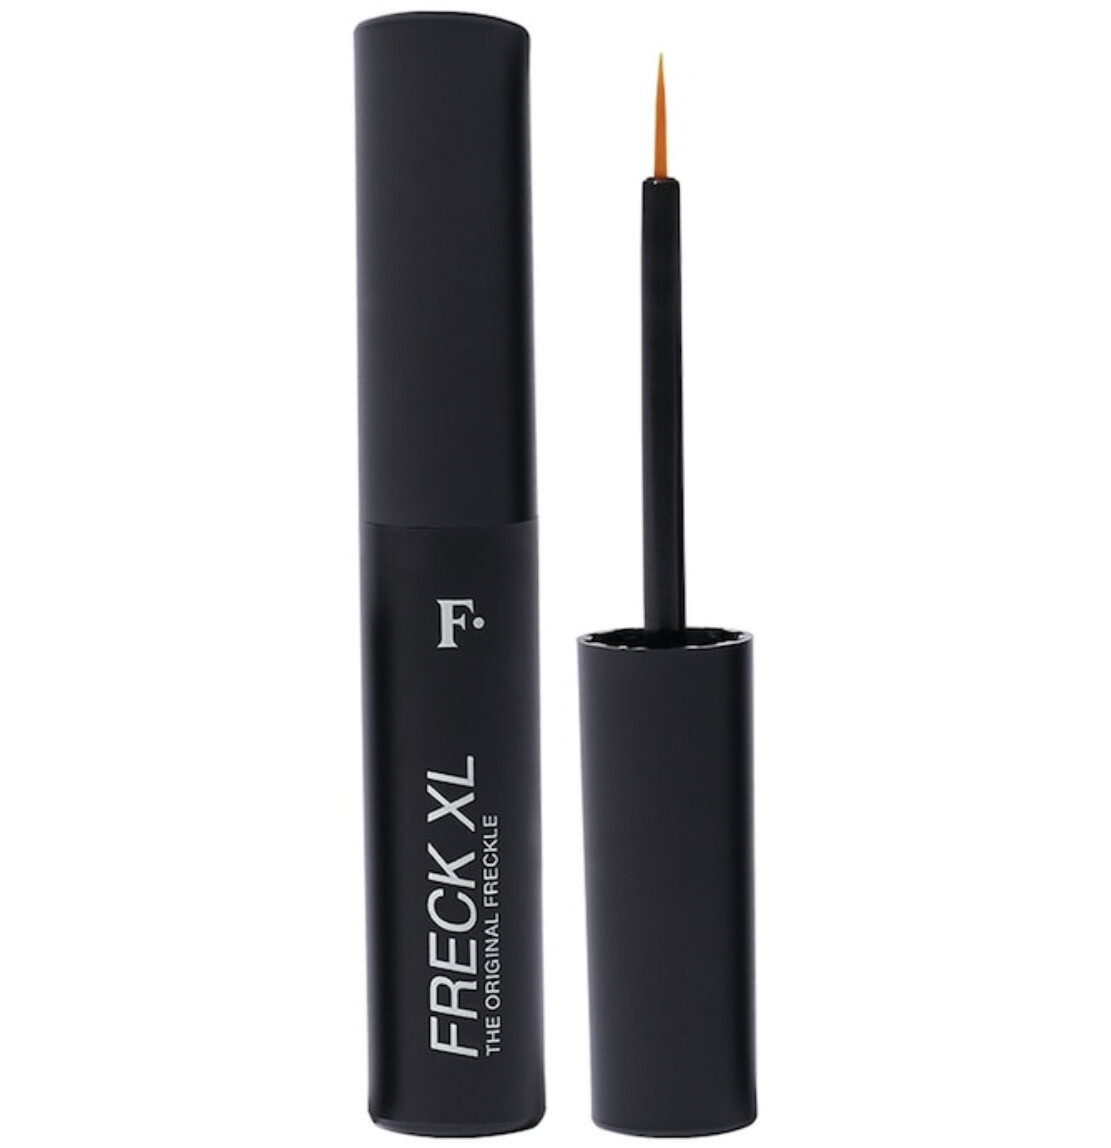 Freck Beauty - Freck The Original Freckle | Freck XL - light-medium